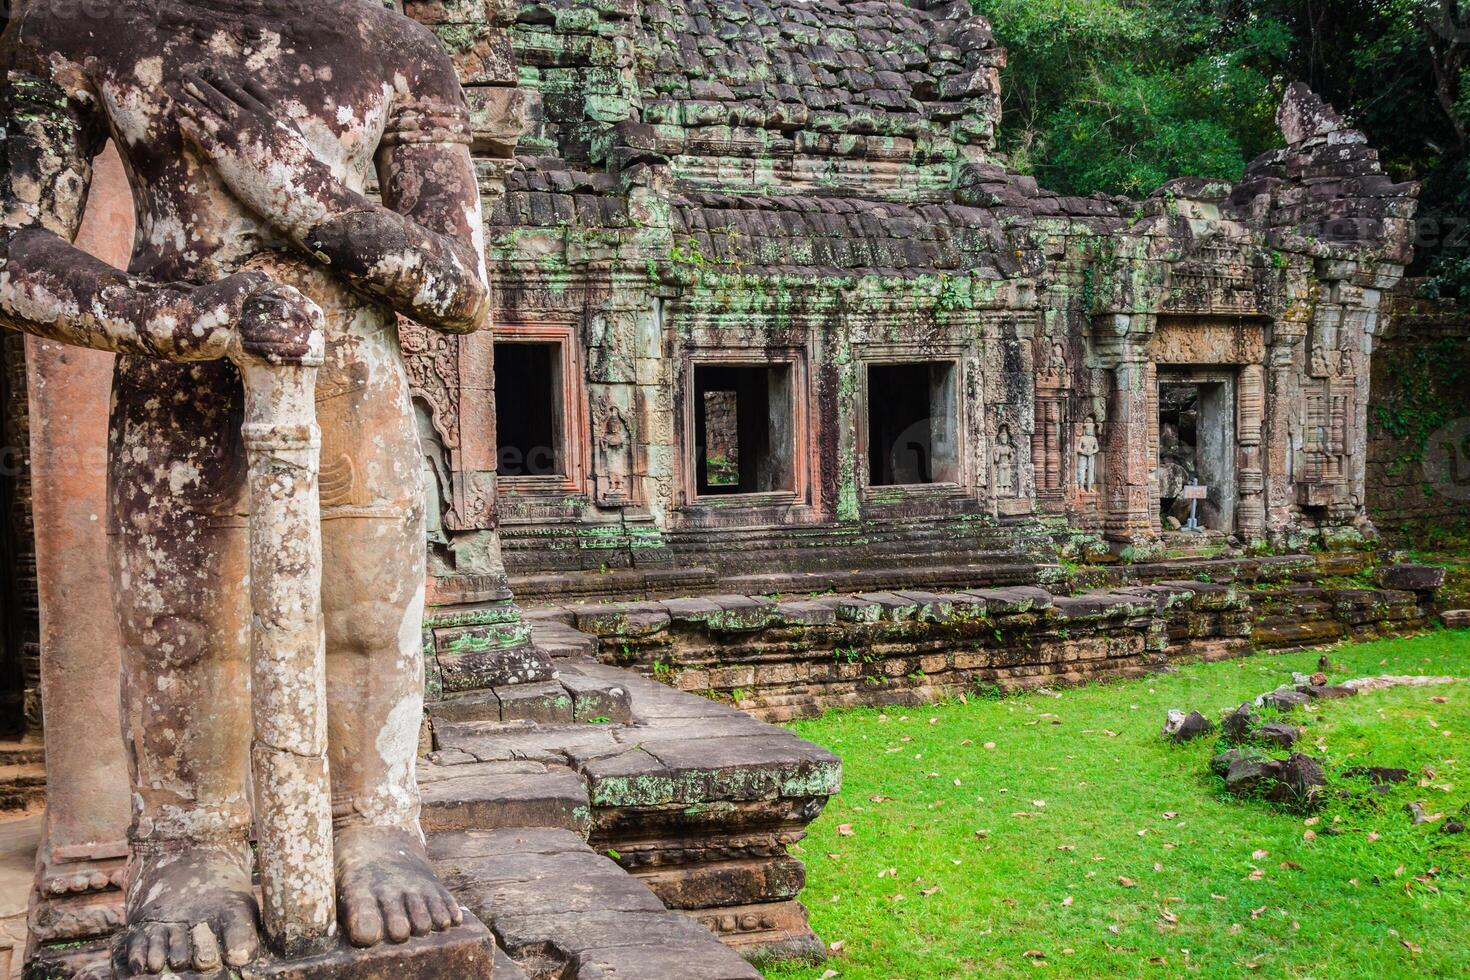 Ruinen von pra Khan Tempel im Angkor thom von Kambodscha foto